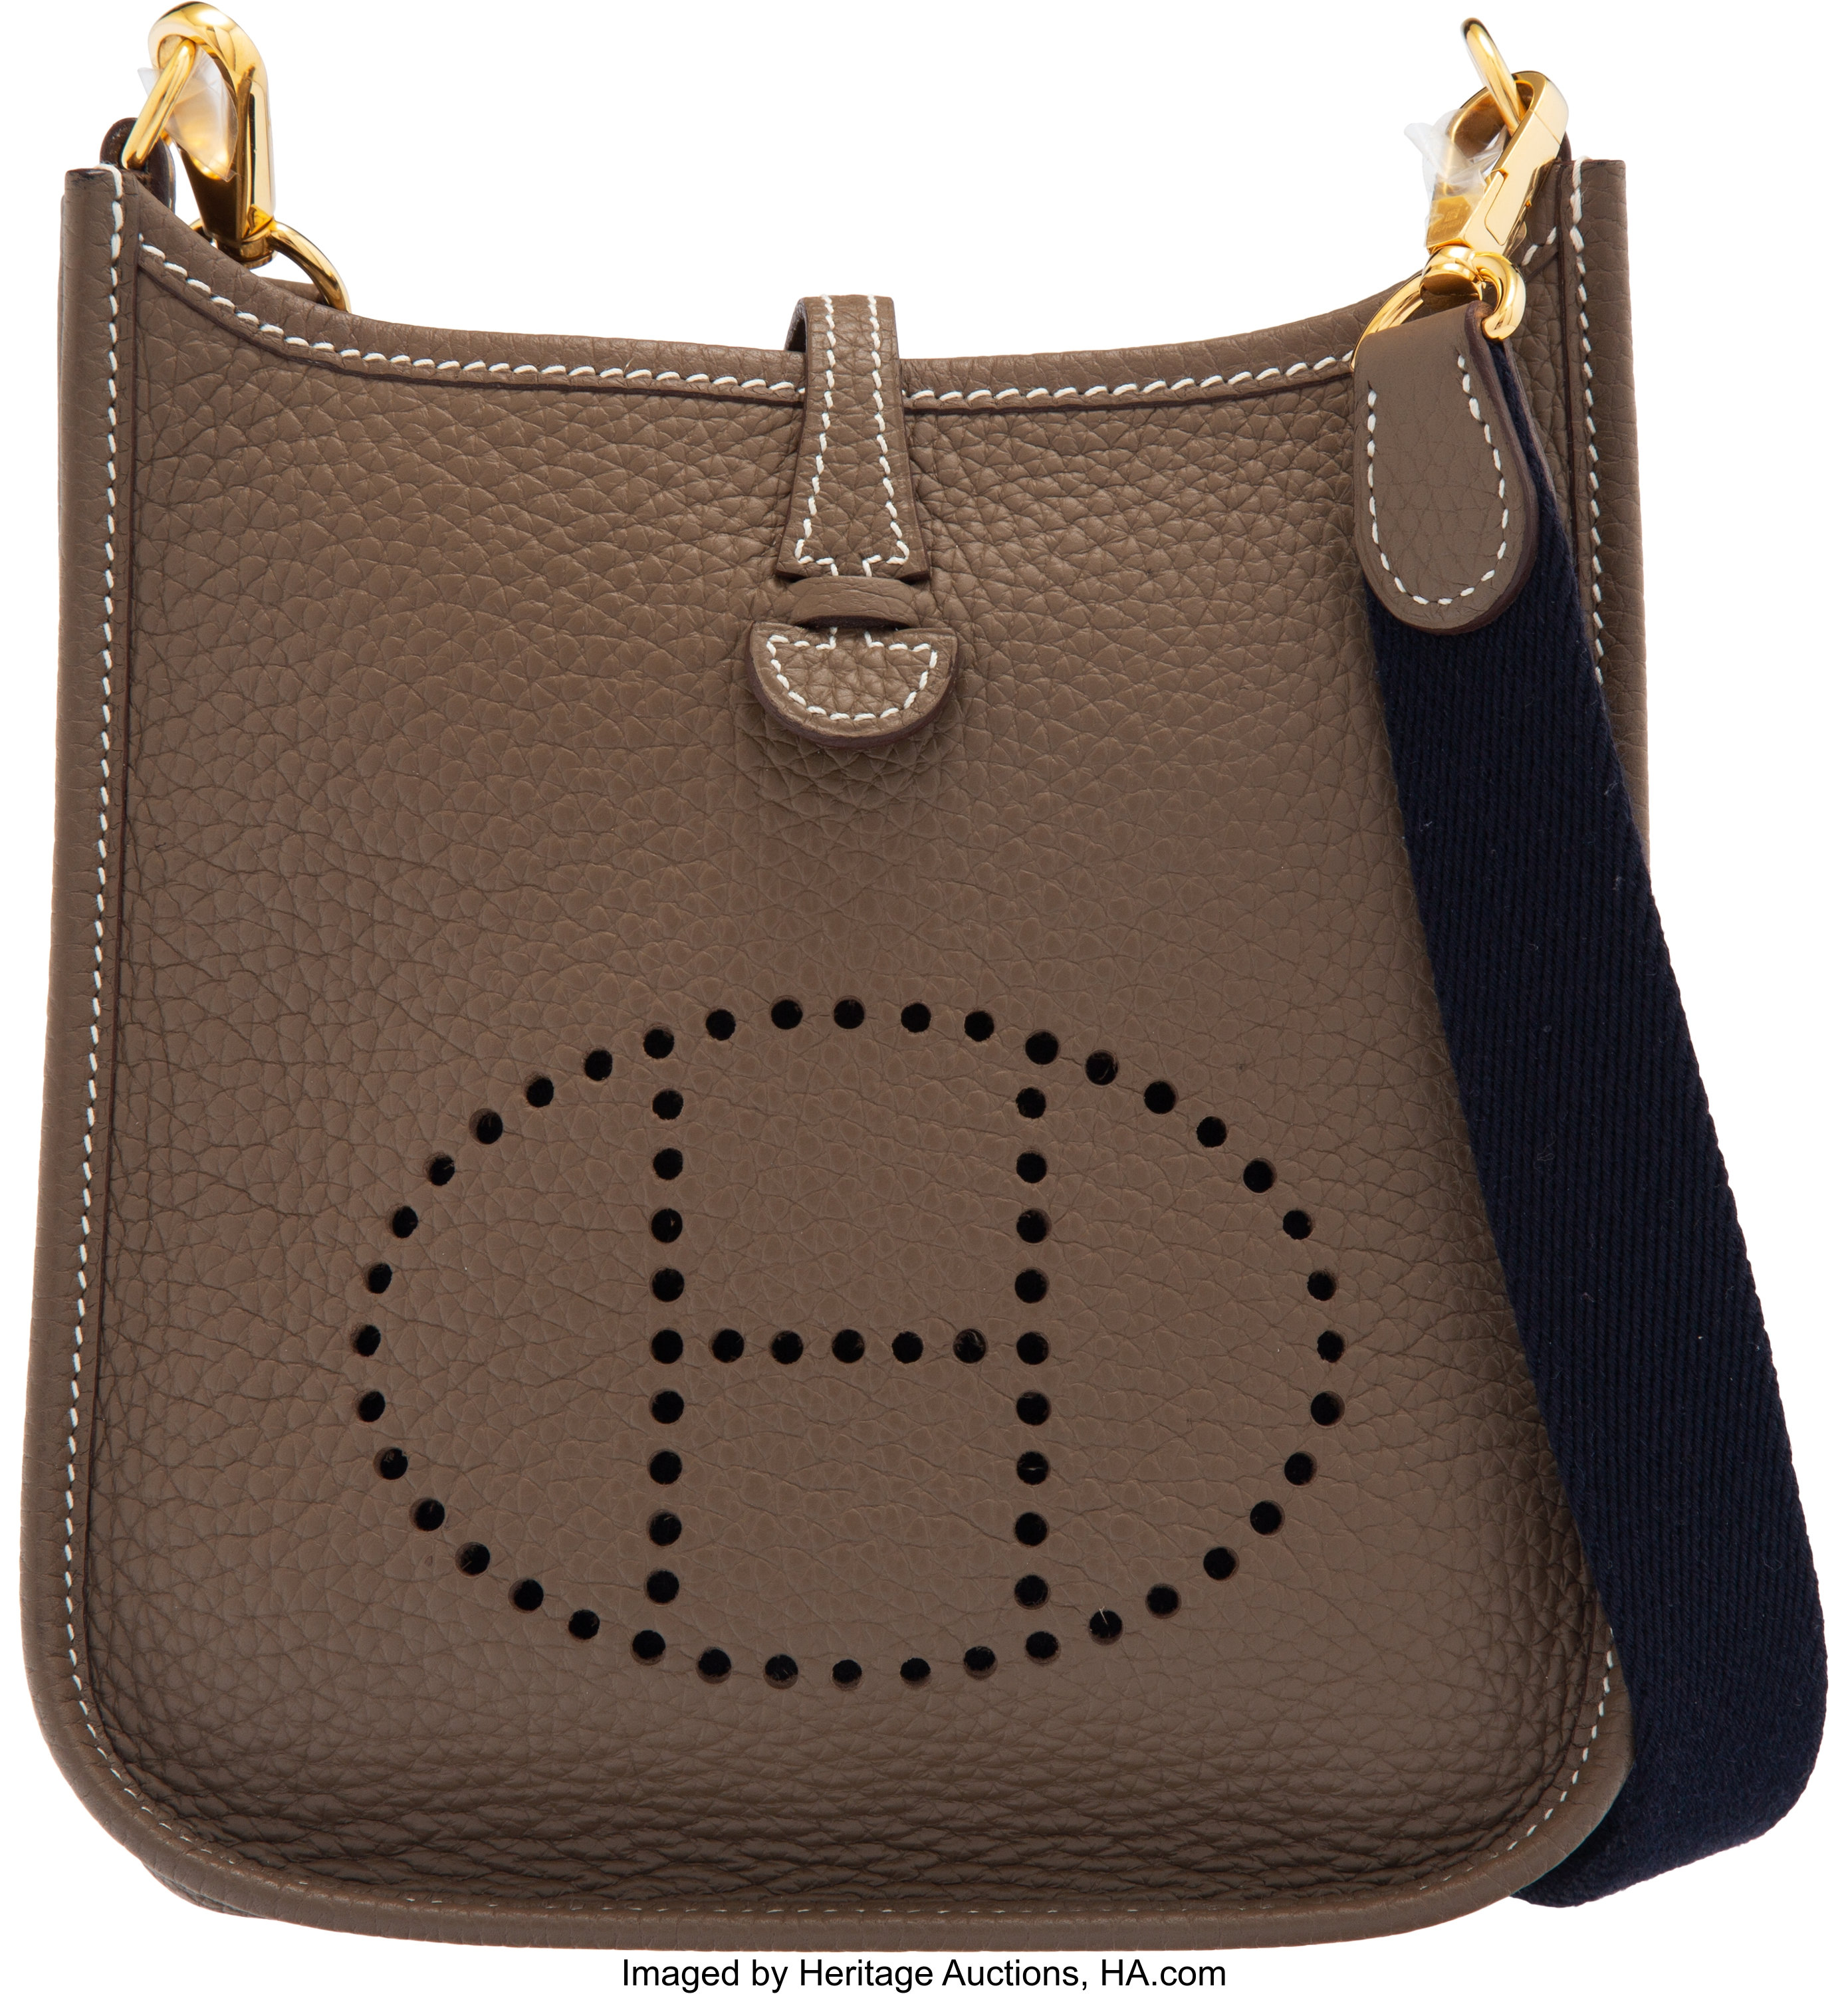 Hermès Etoupe Clemence Leather Evelyne TPM Bag with Gold Hardware